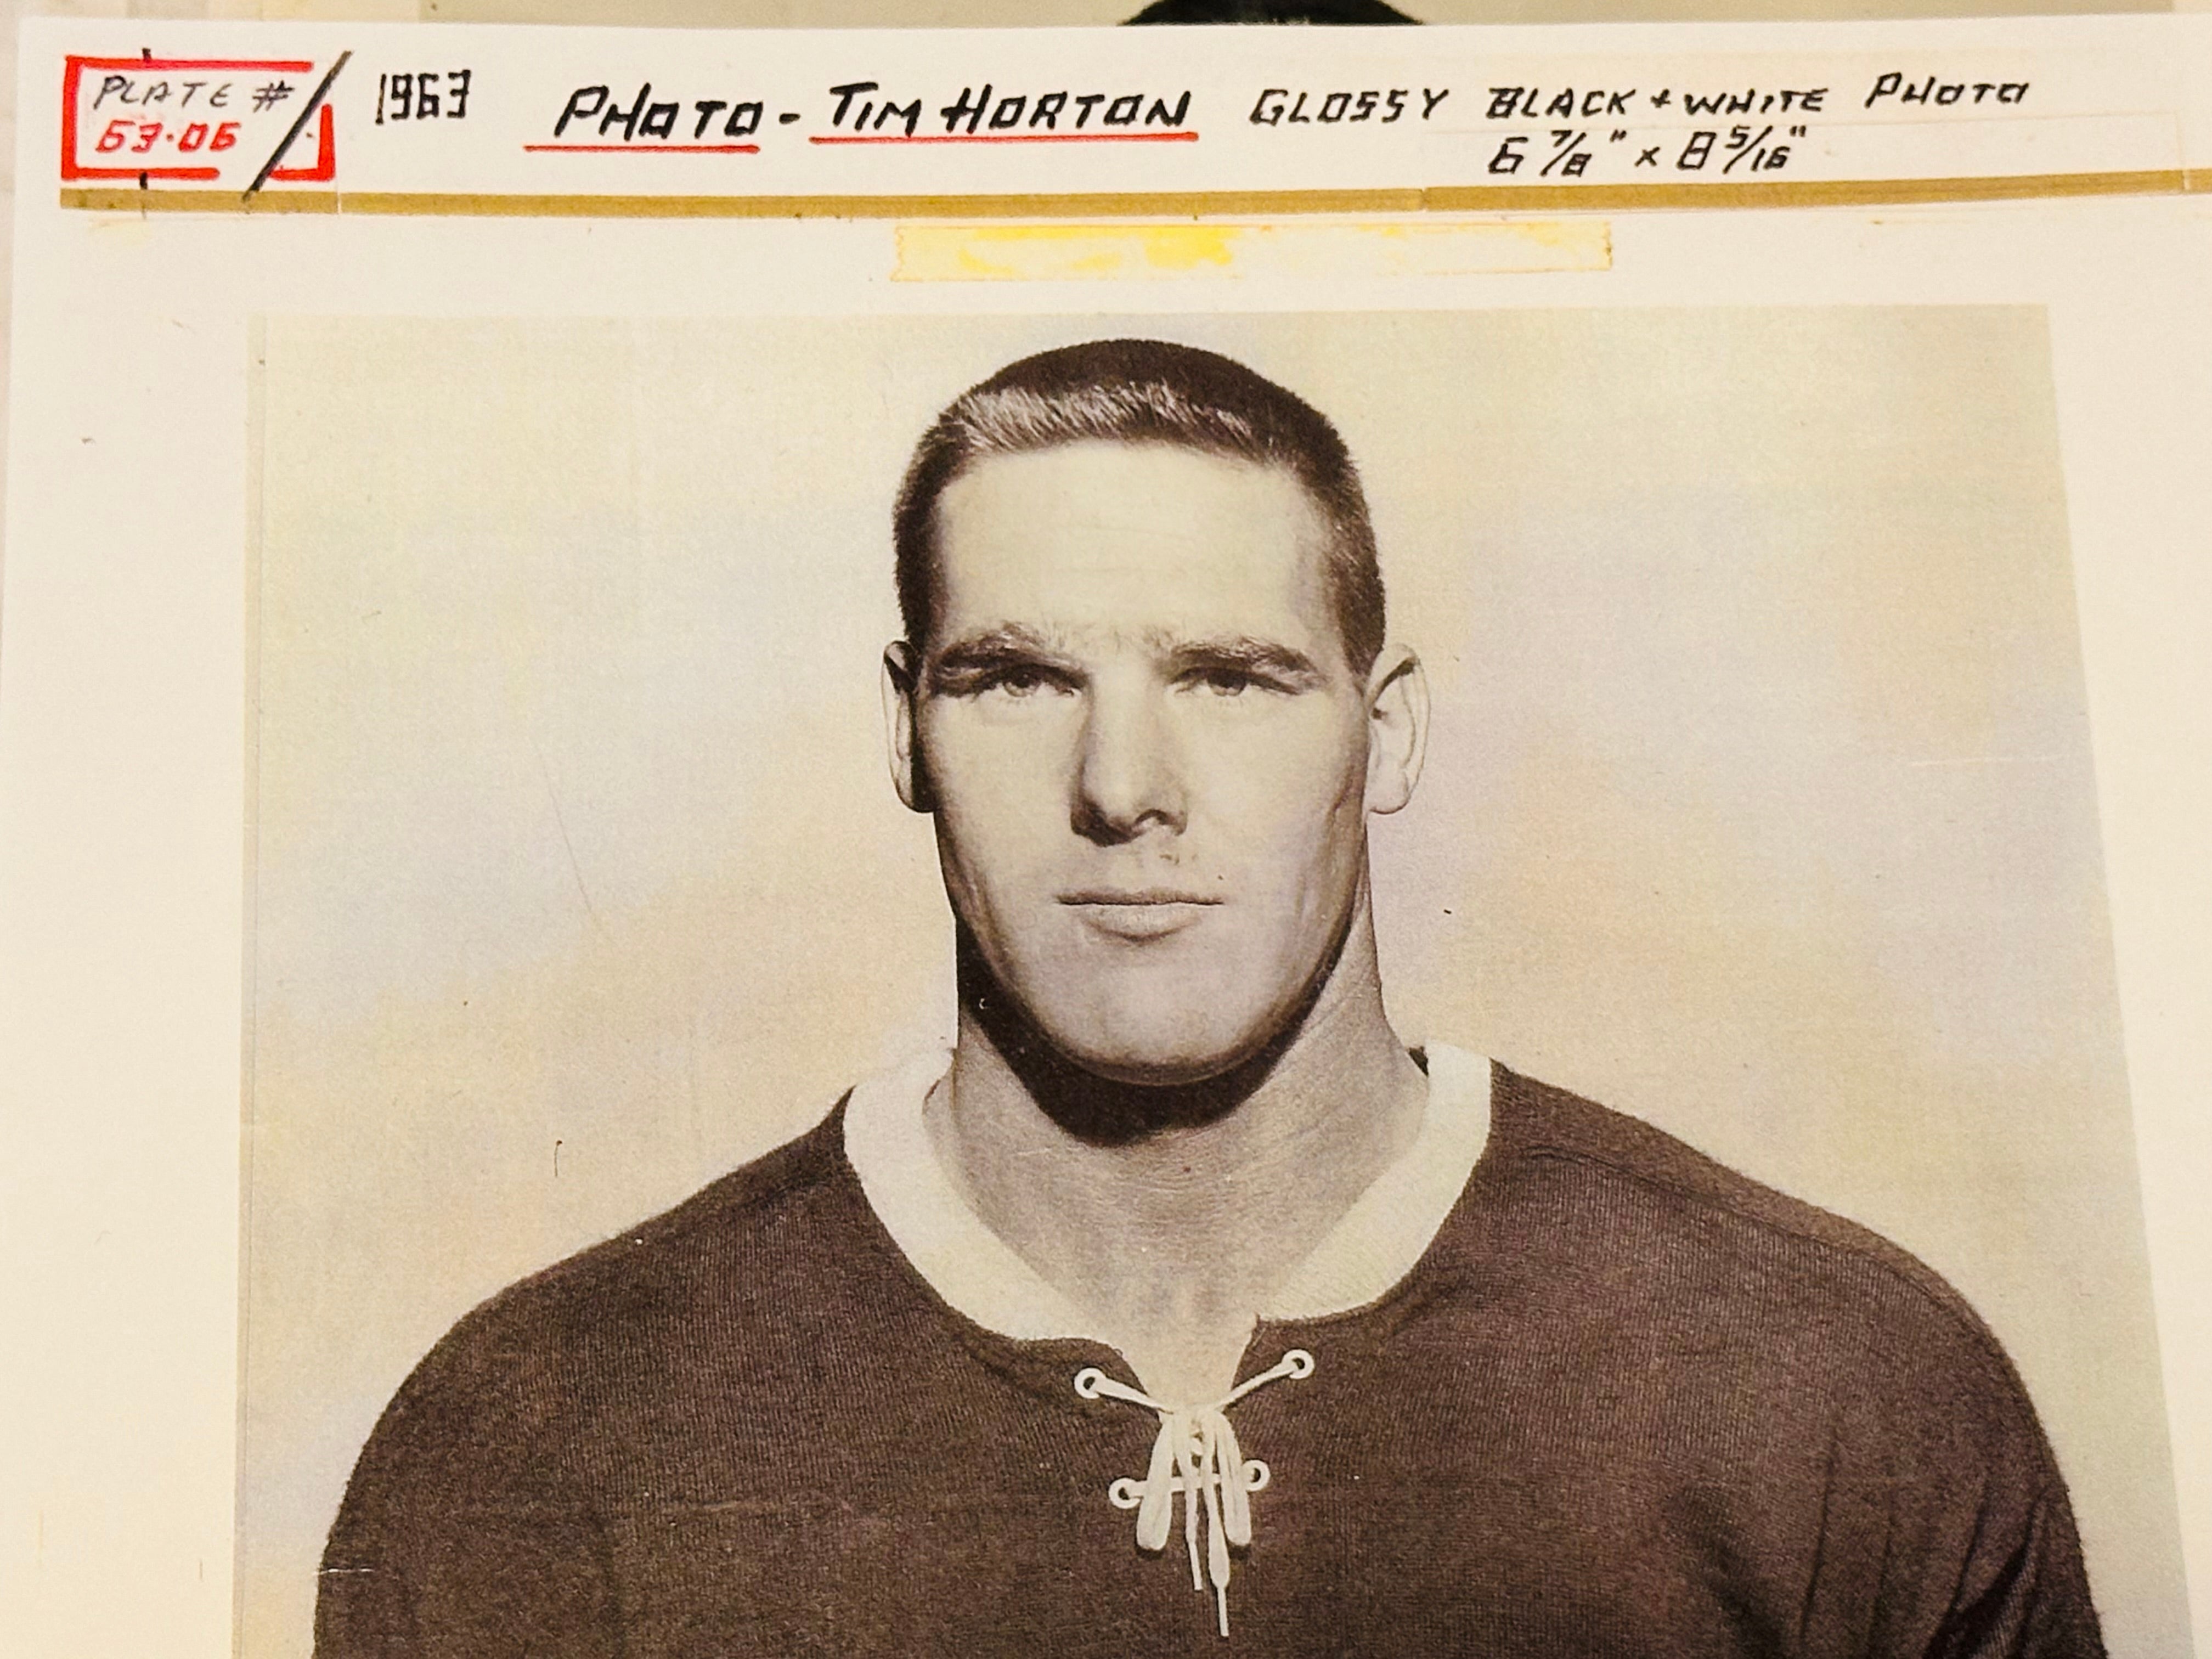 Tim Horton rare original Black and white Leafs glossy press photo 1963